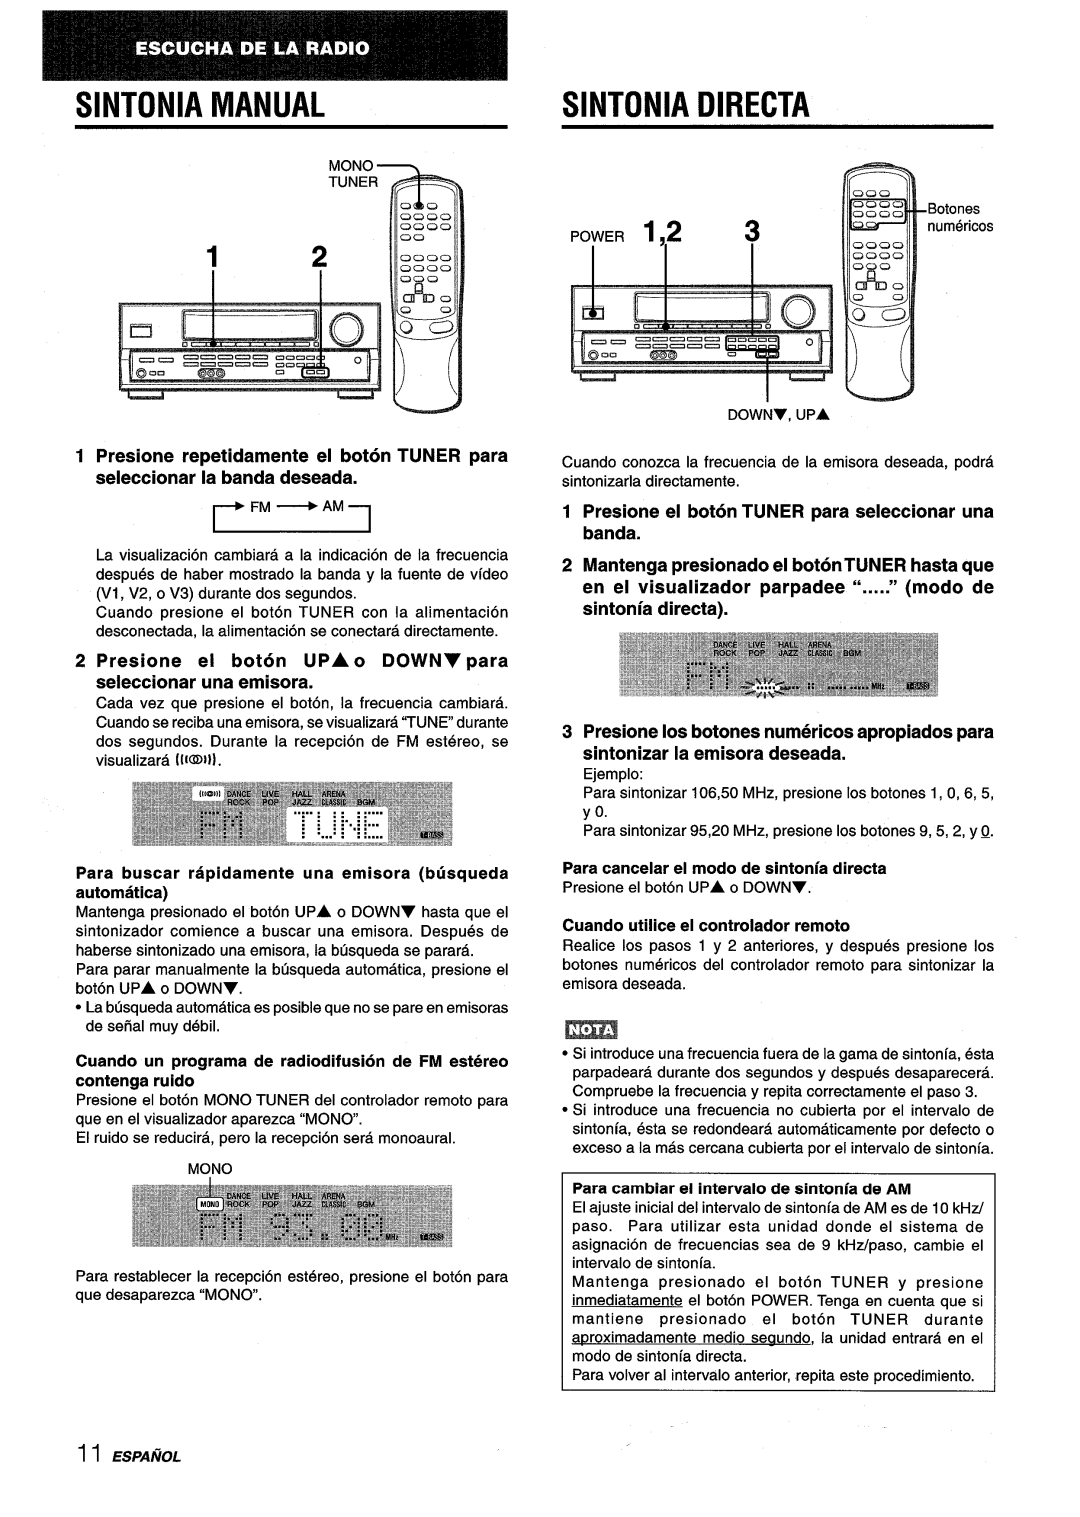 Aiwa AV-D25 manual Sintonia Manual, Sintonia Directa, lQI&O, Presione el boton UPA o DOWNV para seleccionar una emisora 